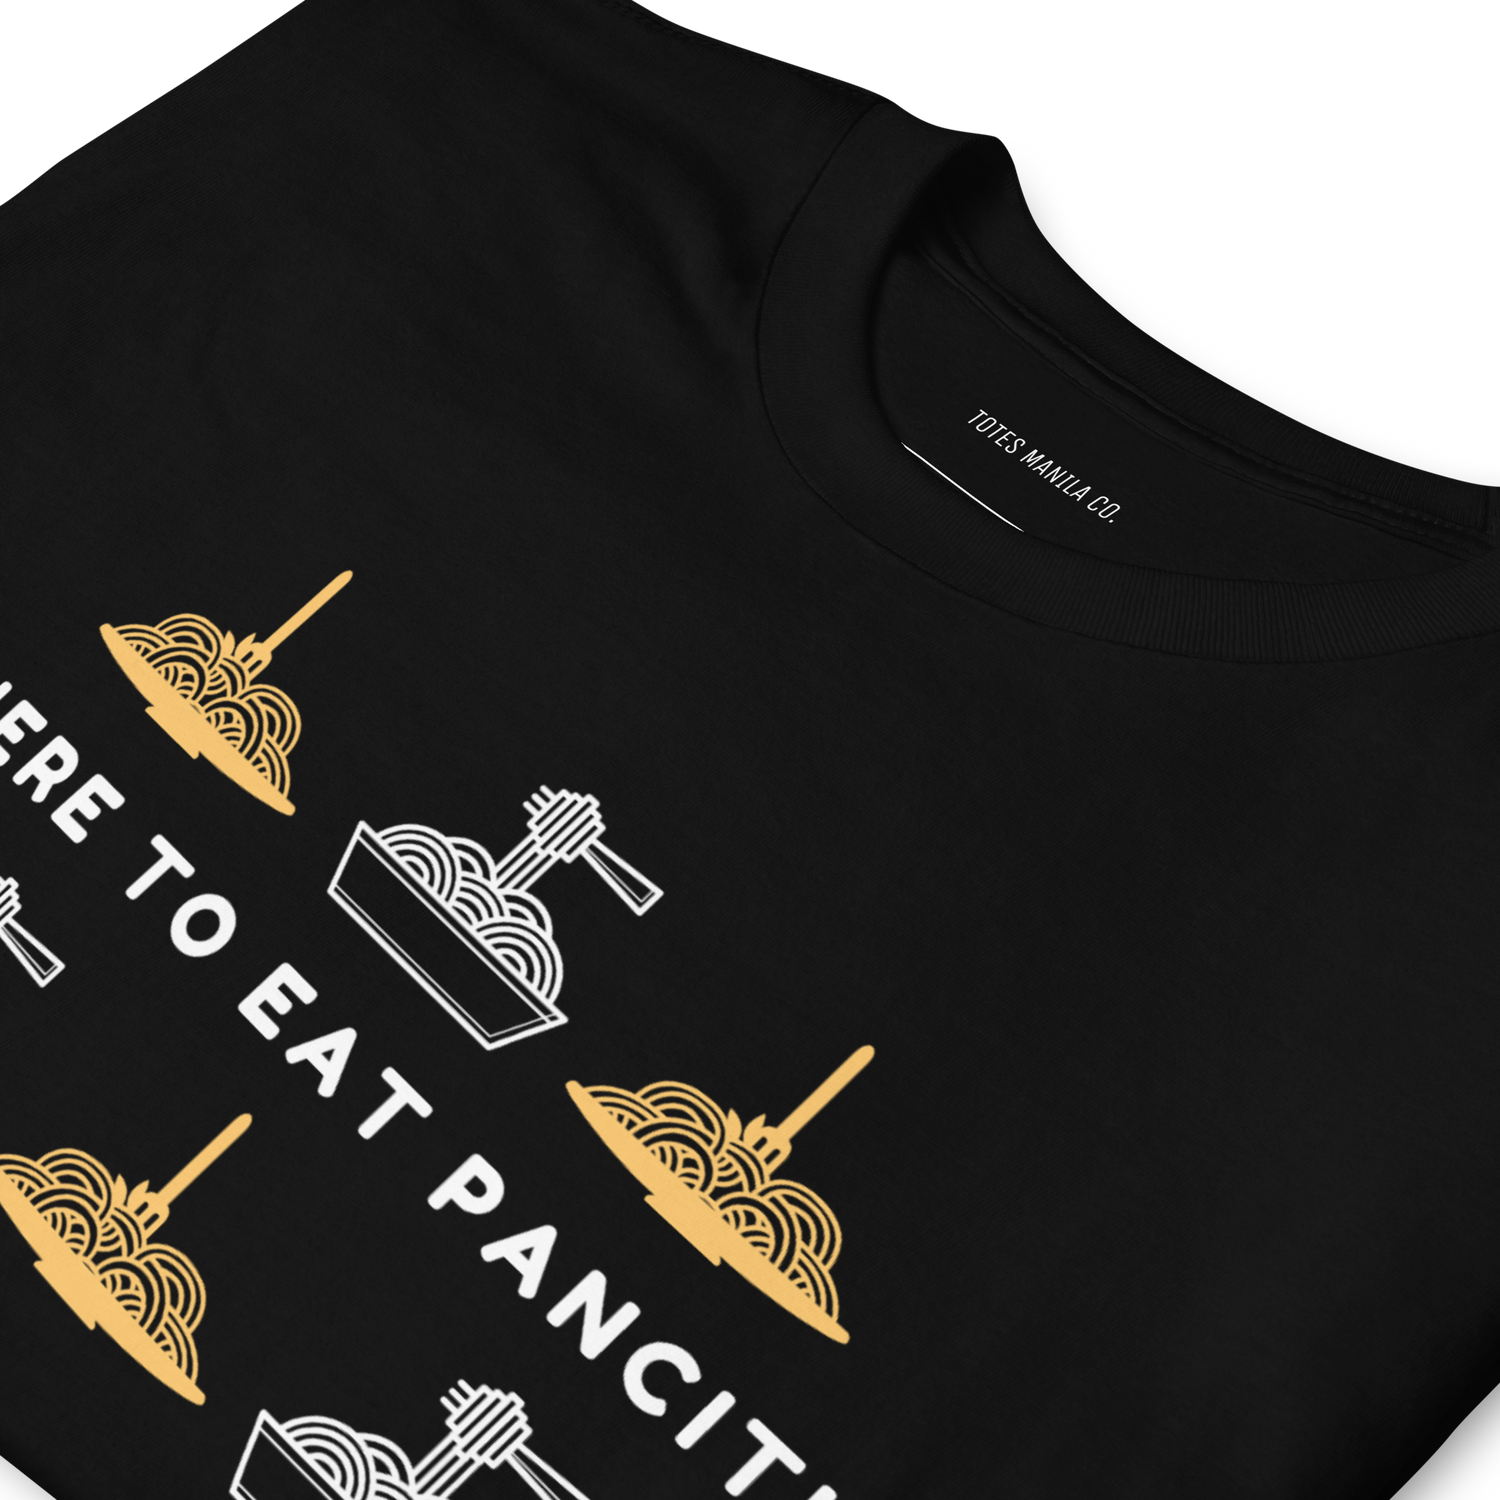 Pancit Canton Food for Filipinos and Filipinas' Men's T-Shirt